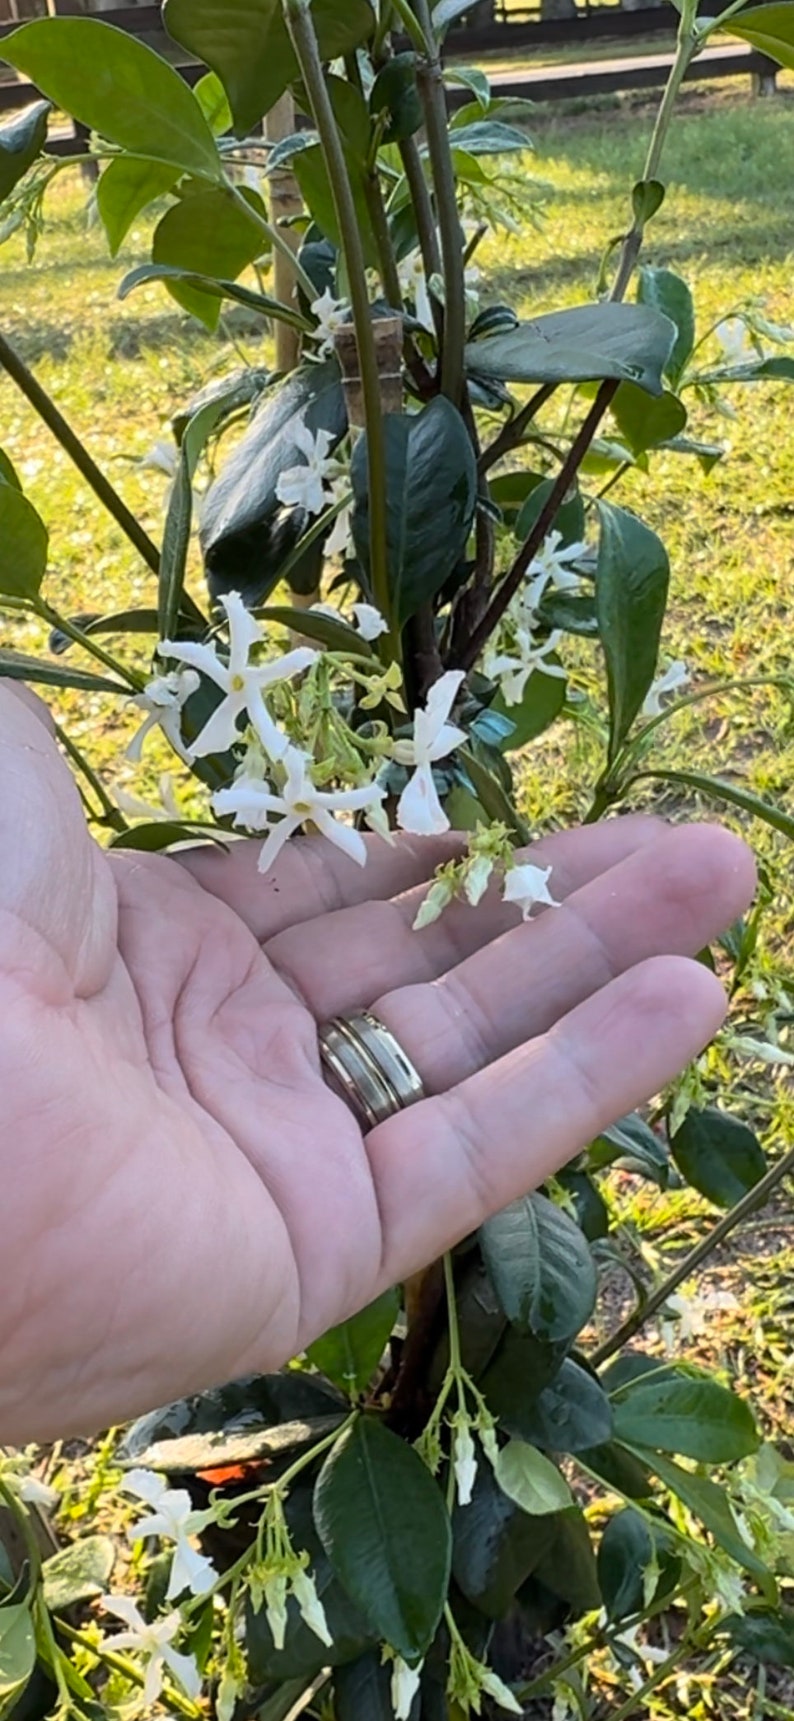 Premium Trachelospermum jasminoides Fragrant Jasmine Plant for Sale 1 Gallon Pot Blooming Flowers image 10